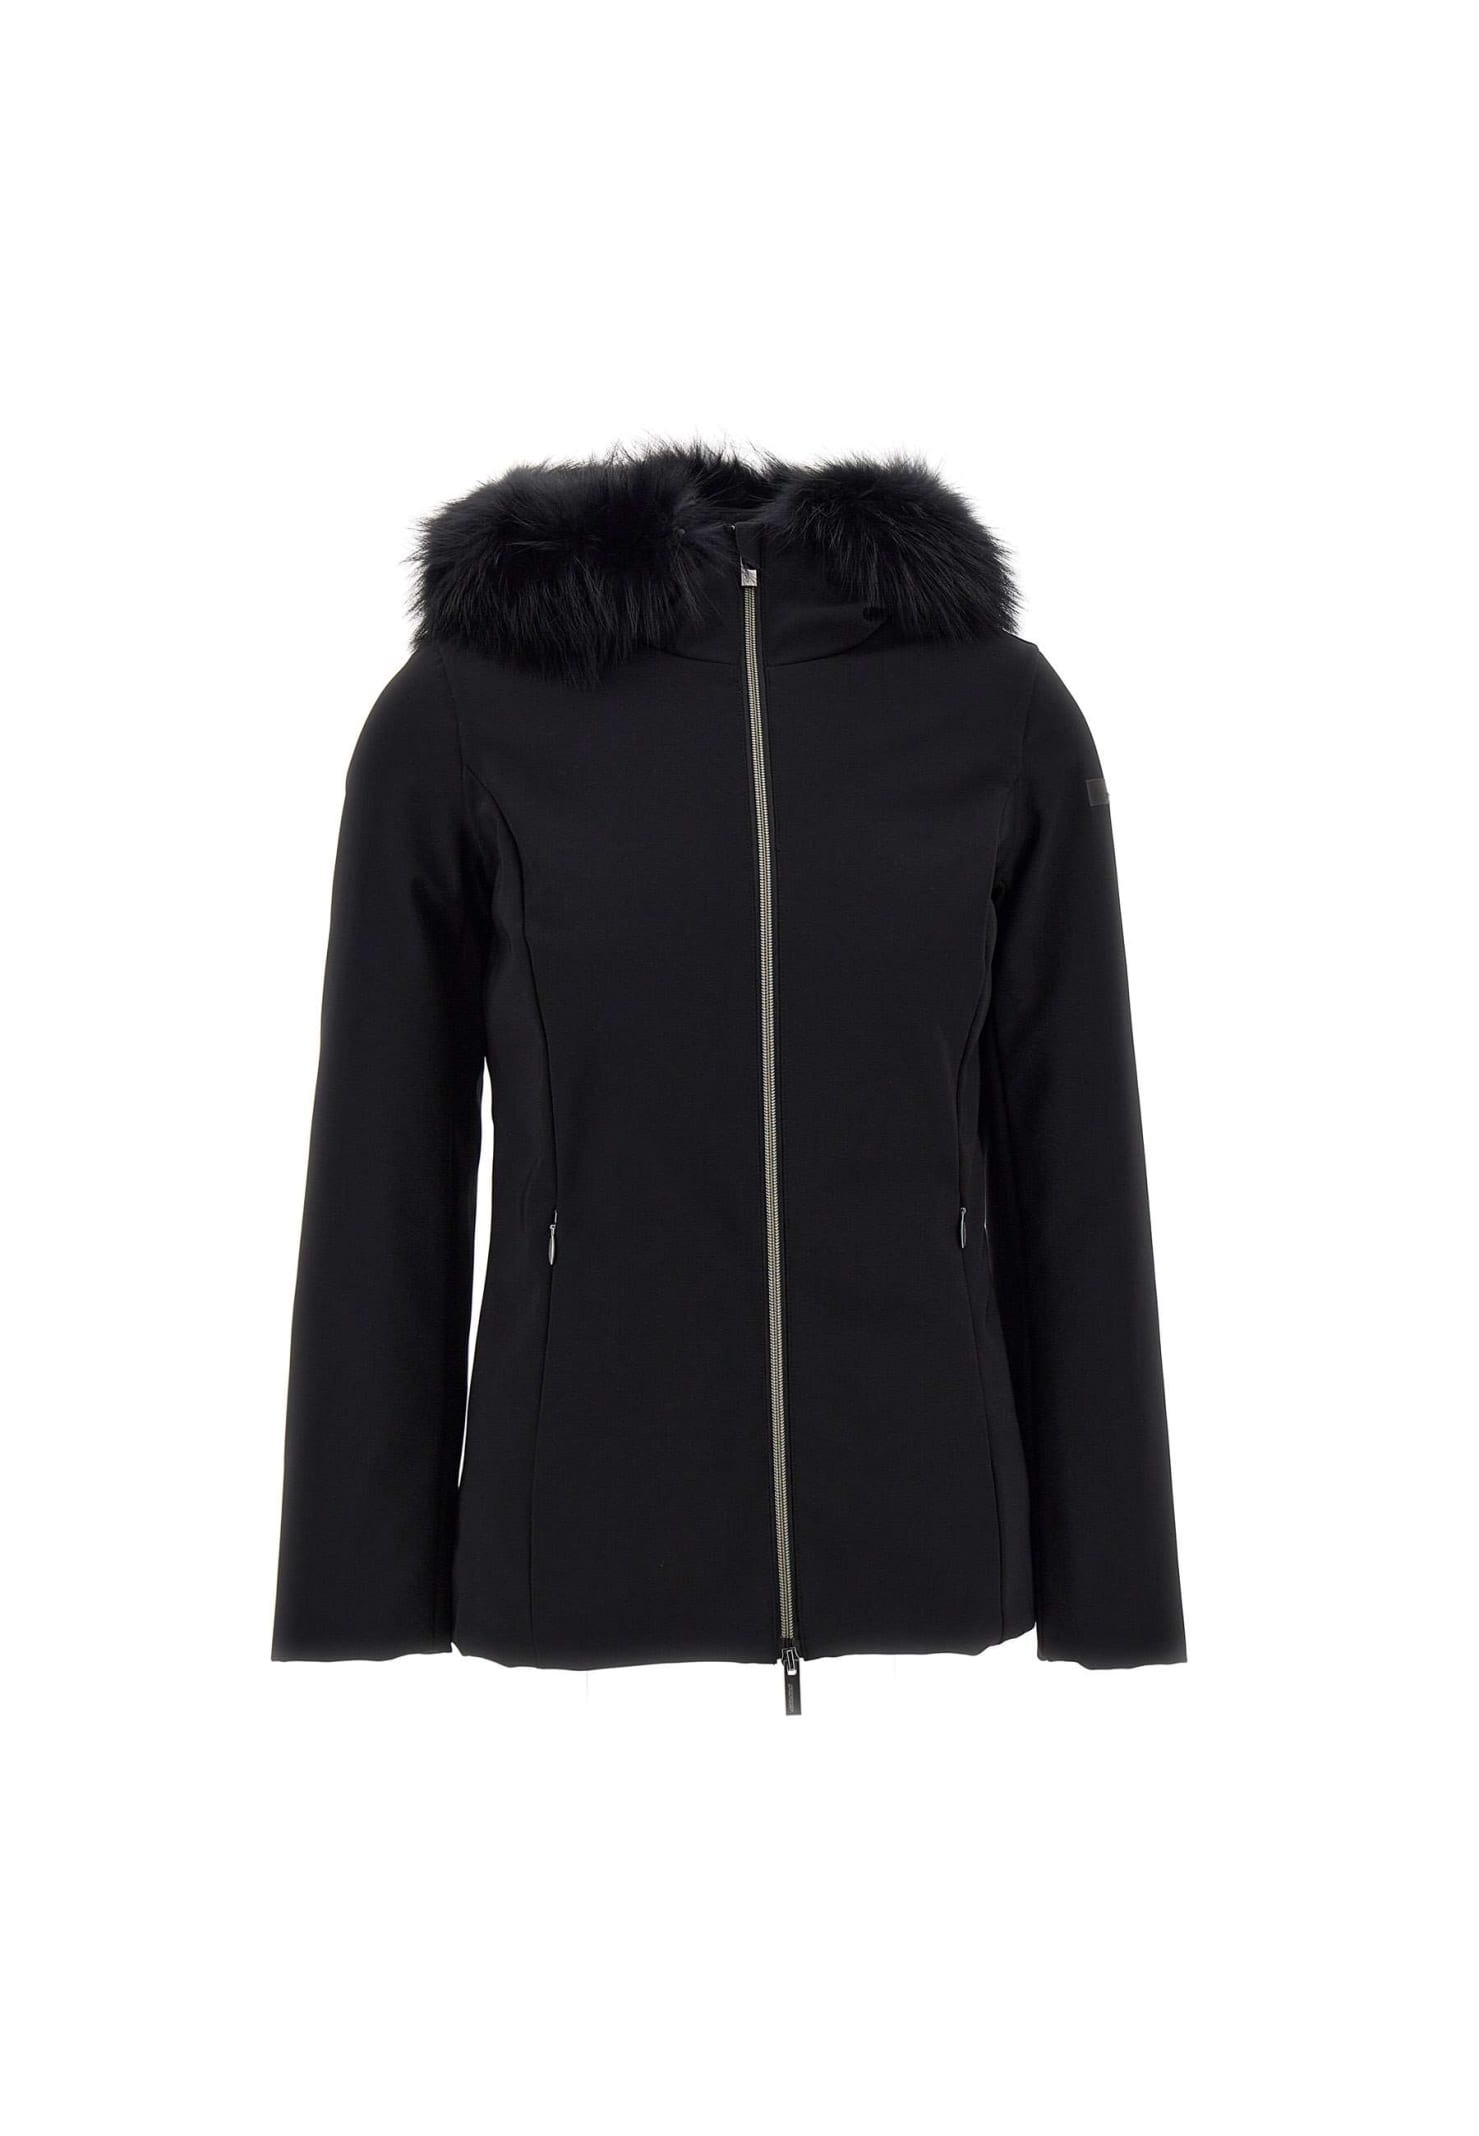 RRD - Roberto Ricci Design Rrd winter Storm Lady Fur Jacket